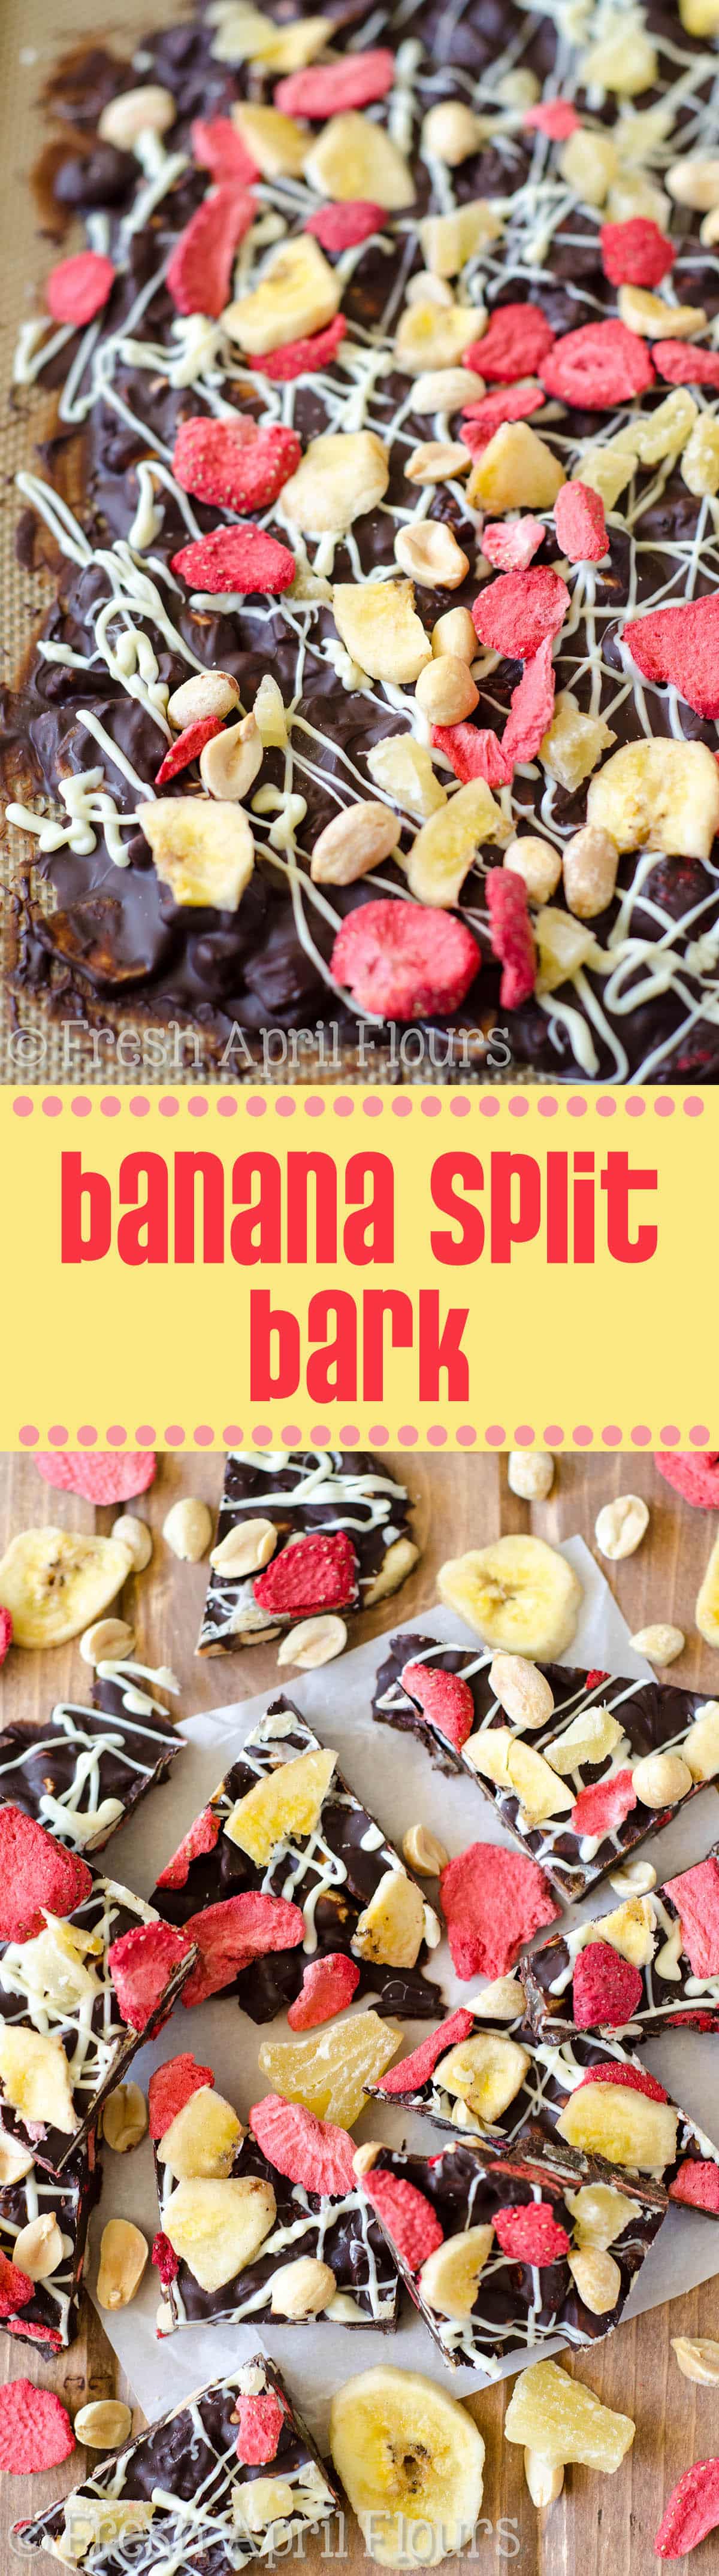 Banana Split Bark: Easy chocolate bark made with bananas, pineapples, strawberries, and peanuts. via @frshaprilflours